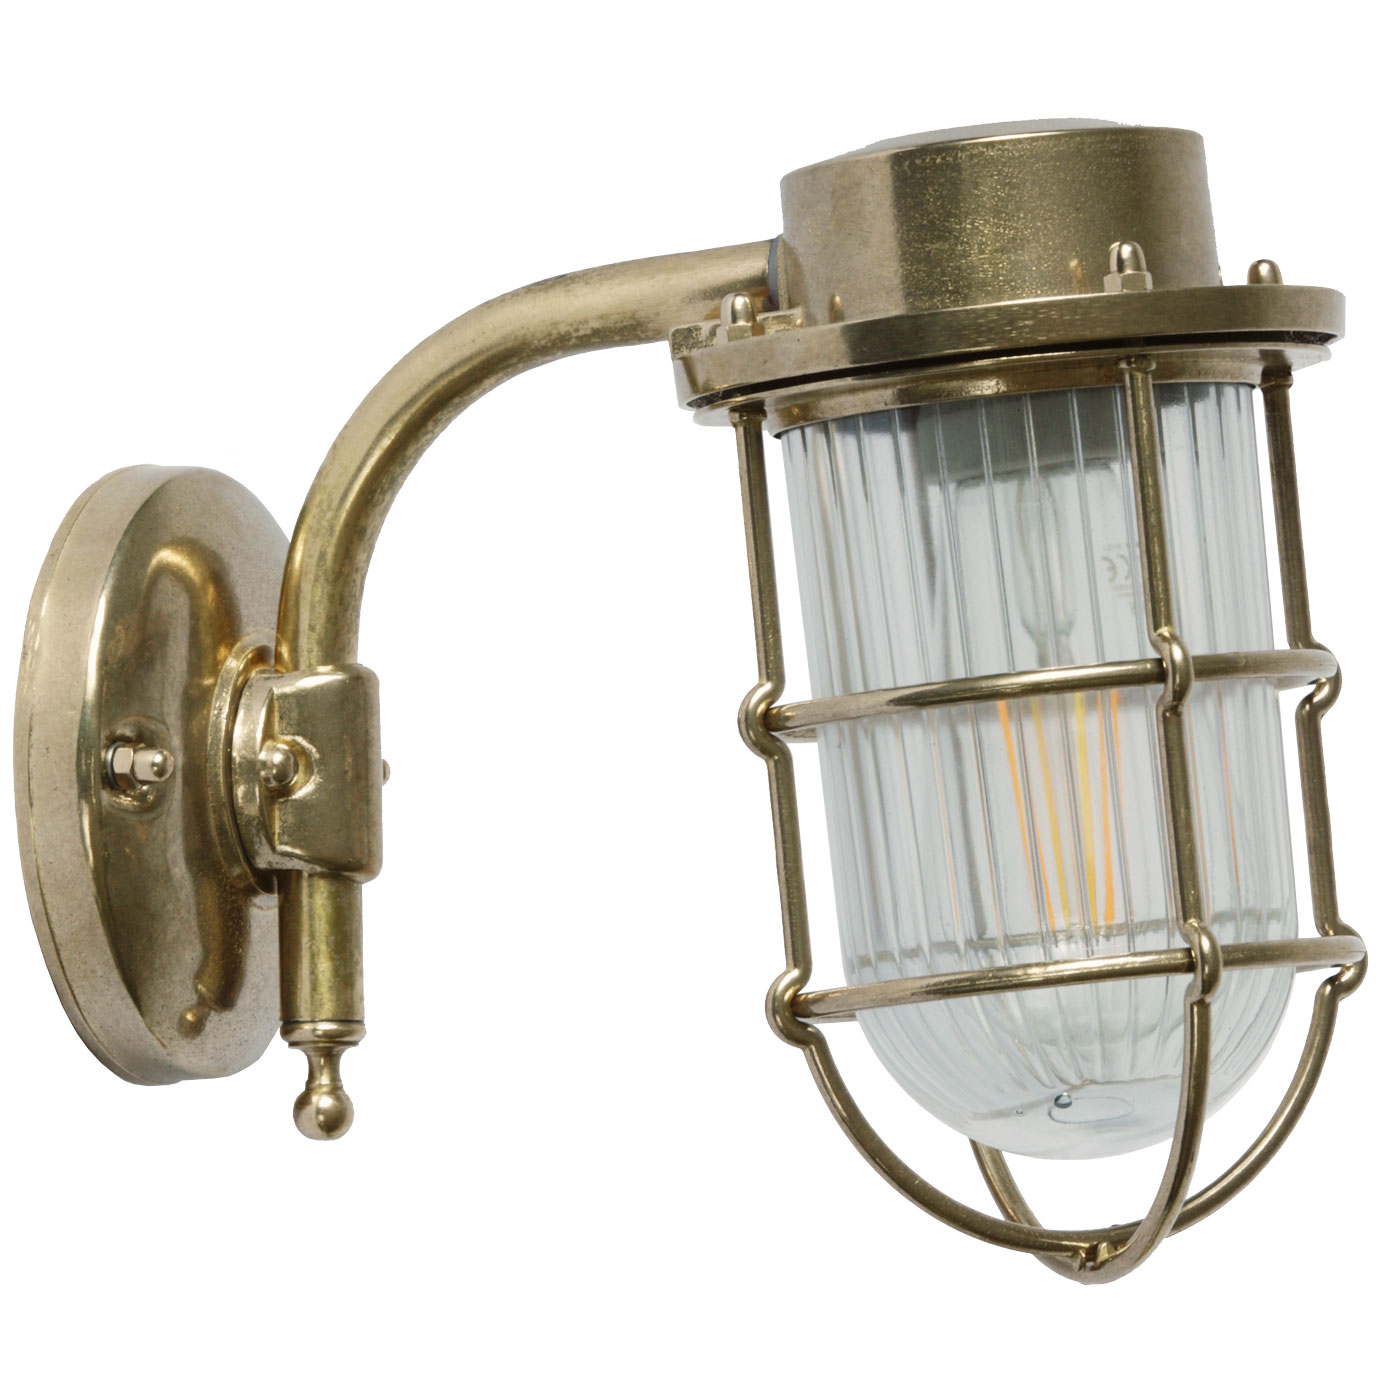 Messing-Wandlampe N° 816 mit Schutzglas am Ausleger